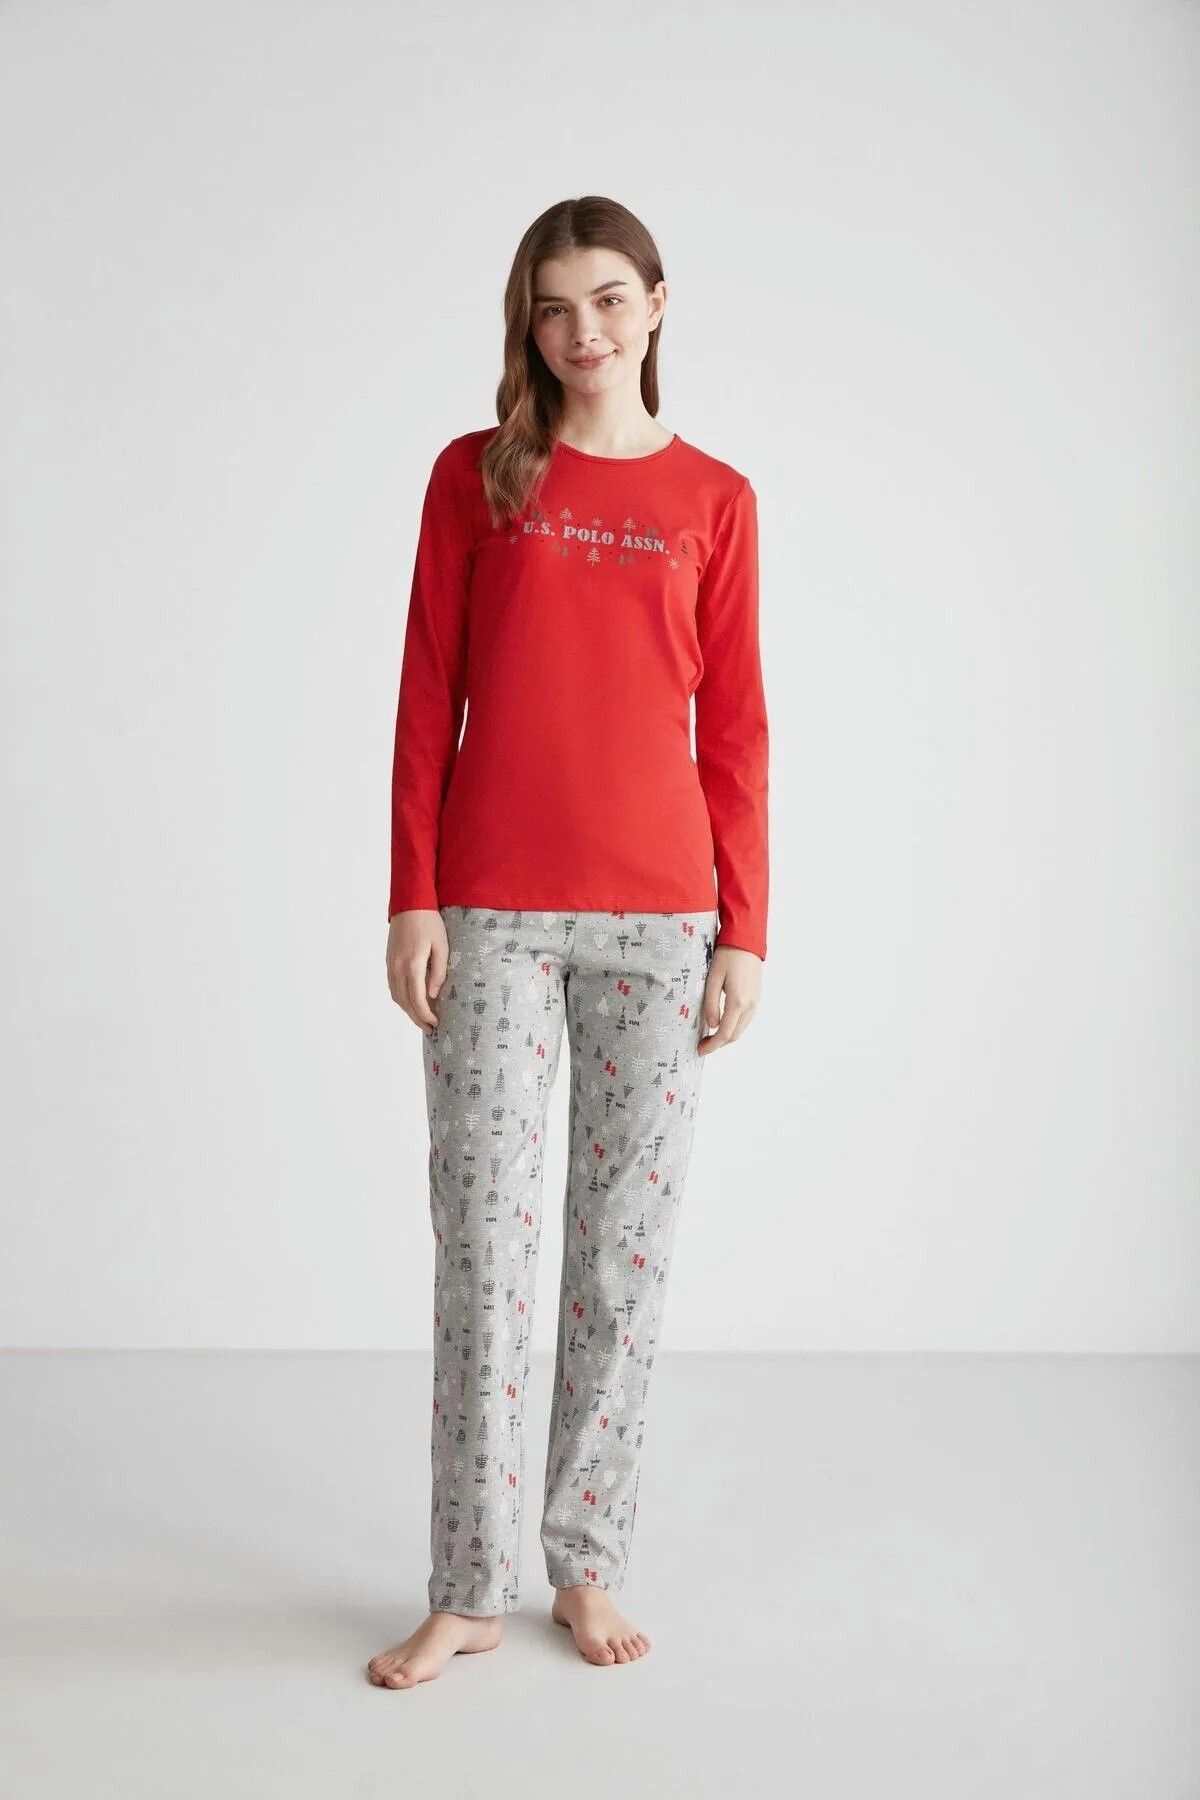 U.S. Polo Assn. Kadın Yuvarlak Yaka %100 Pamuk Pijama Takımı